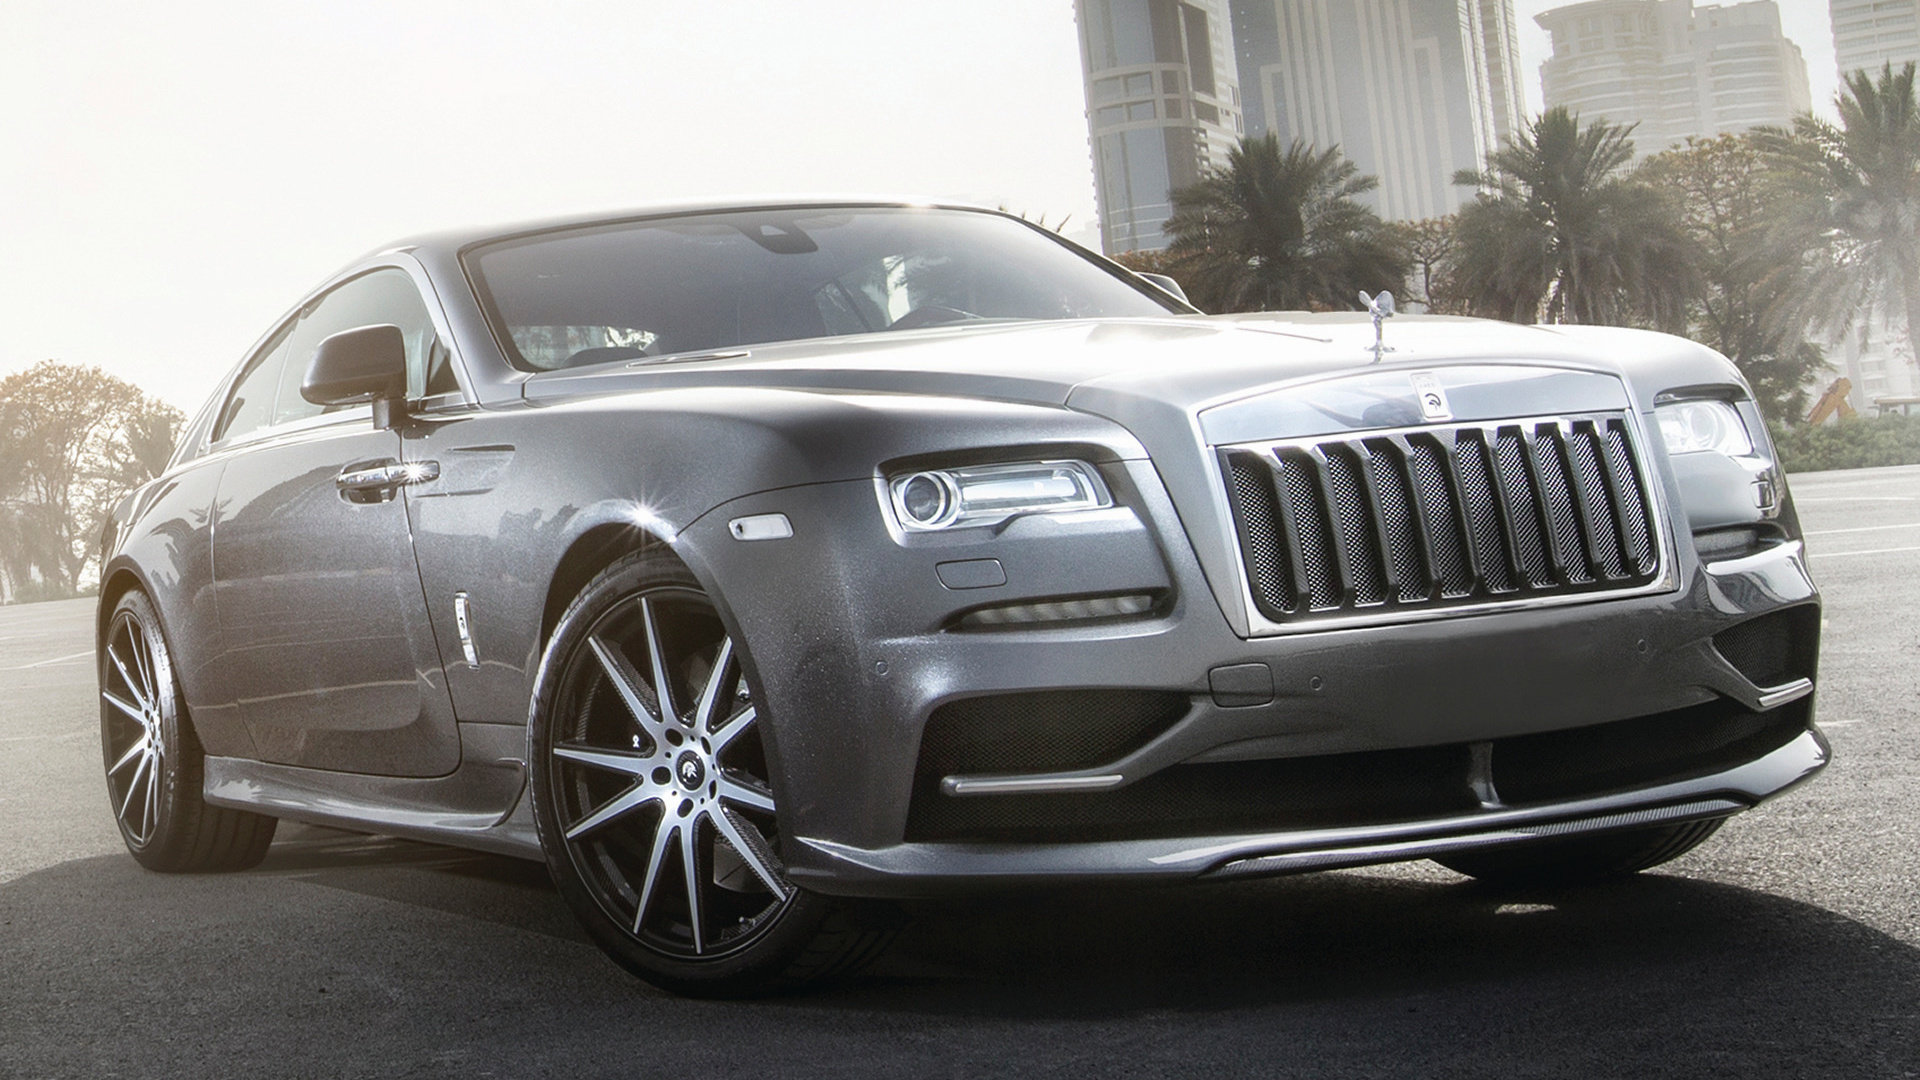 2014 Rolls-Royce Wraith by Ares Design - Fondos de Pantalla e Imágenes en  HD | Car Pixel